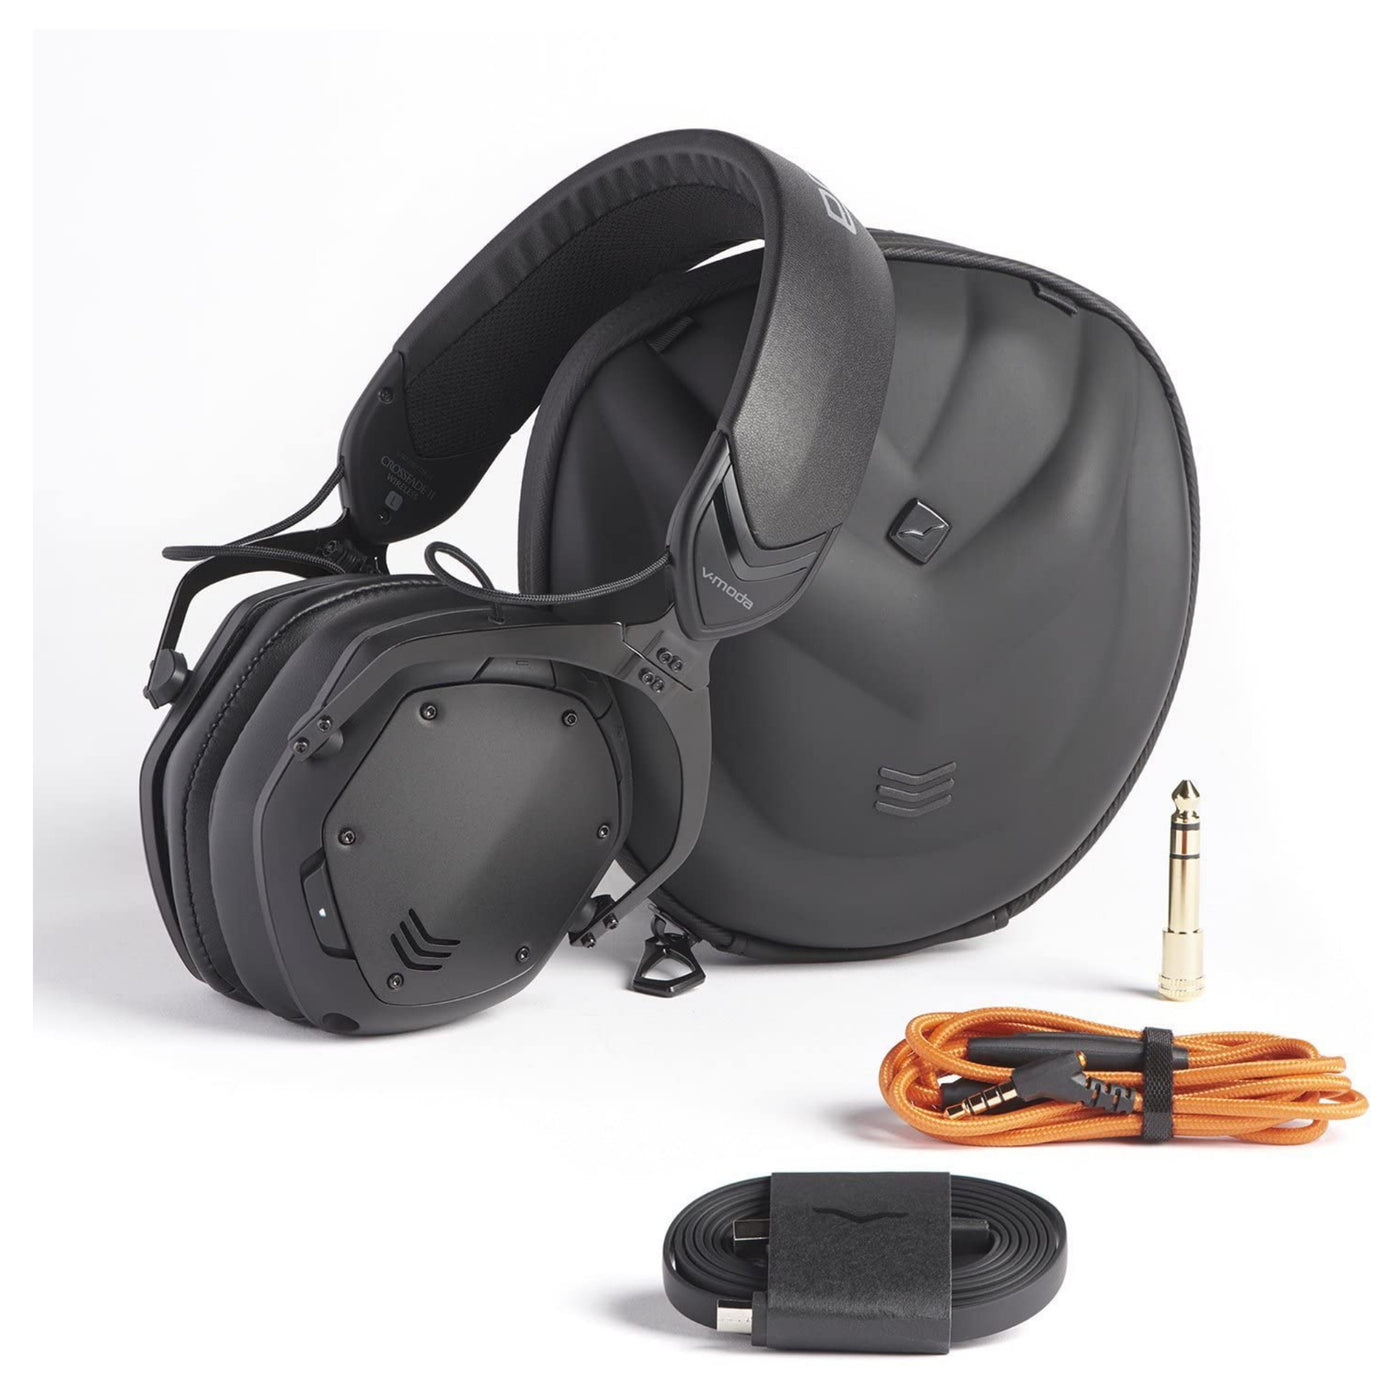 V-Moda Crossfade 2 Wireless Codex Edition Bluetooth Headphones - Matte Black